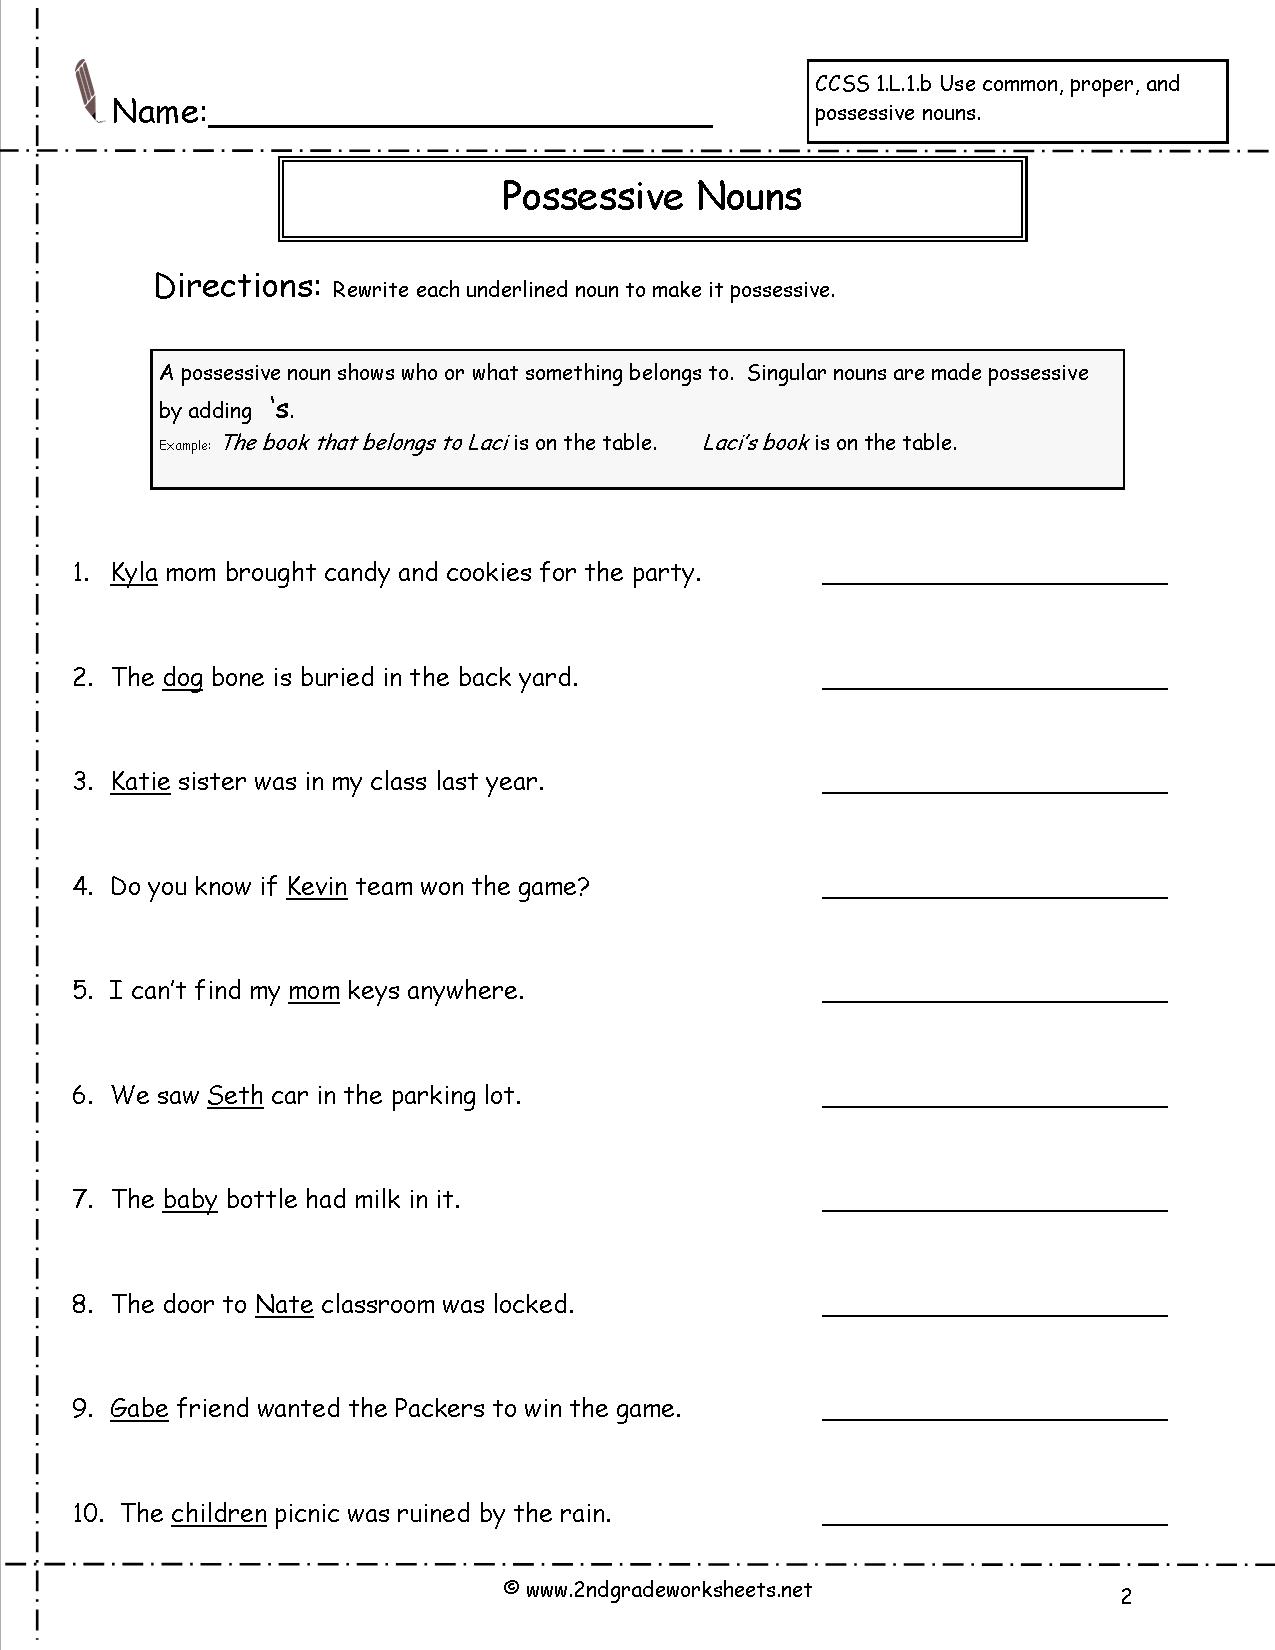 Possessive Nouns Worksheets 2nd Grade Image